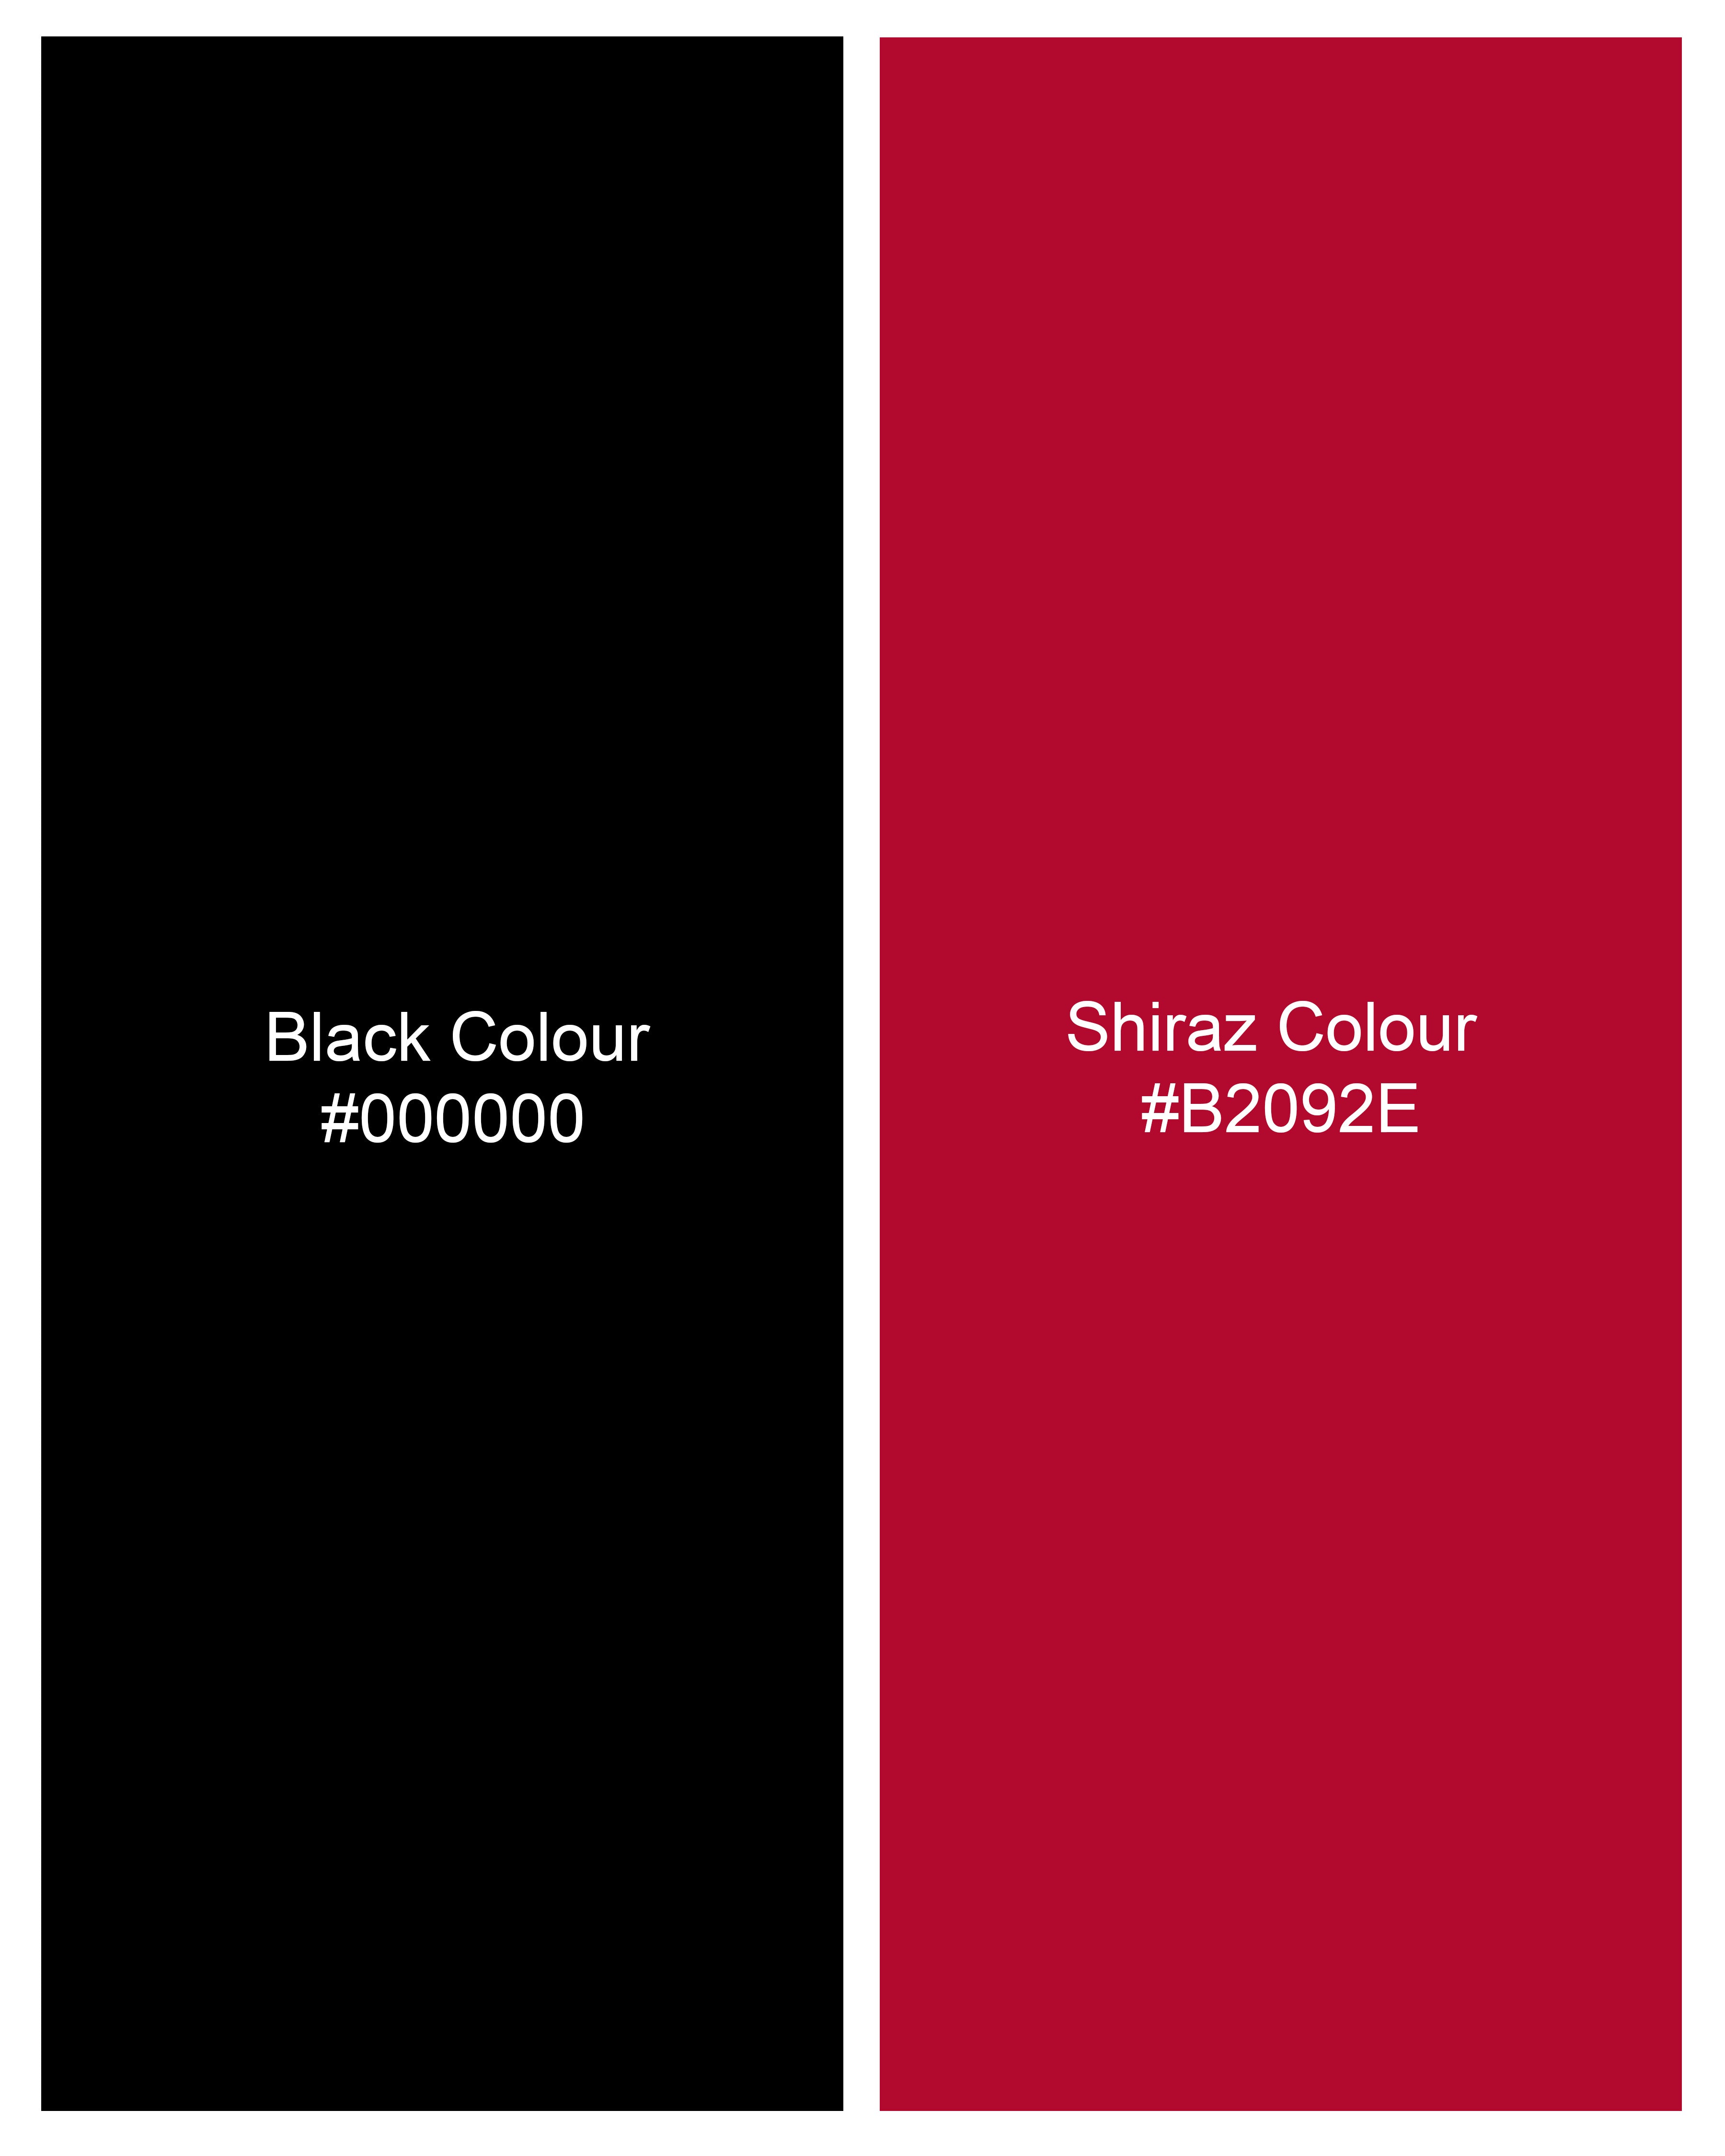 Jade Black with Shiraz Red Embroidered Super Soft Premium Cotton Shirt 1312-BLK-E025-38, 1312-BLK-E025-H-38, 1312-BLK-E025-39, 1312-BLK-E025-H-39, 1312-BLK-E025-40, 1312-BLK-E025-H-40, 1312-BLK-E025-42, 1312-BLK-E025-H-42, 1312-BLK-E025-44, 1312-BLK-E025-H-44, 1312-BLK-E025-46, 1312-BLK-E025-H-46, 1312-BLK-E025-48, 1312-BLK-E025-H-48, 1312-BLK-E025-50, 1312-BLK-E025-H-50, 1312-BLK-E025-52, 1312-BLK-E025-H-52